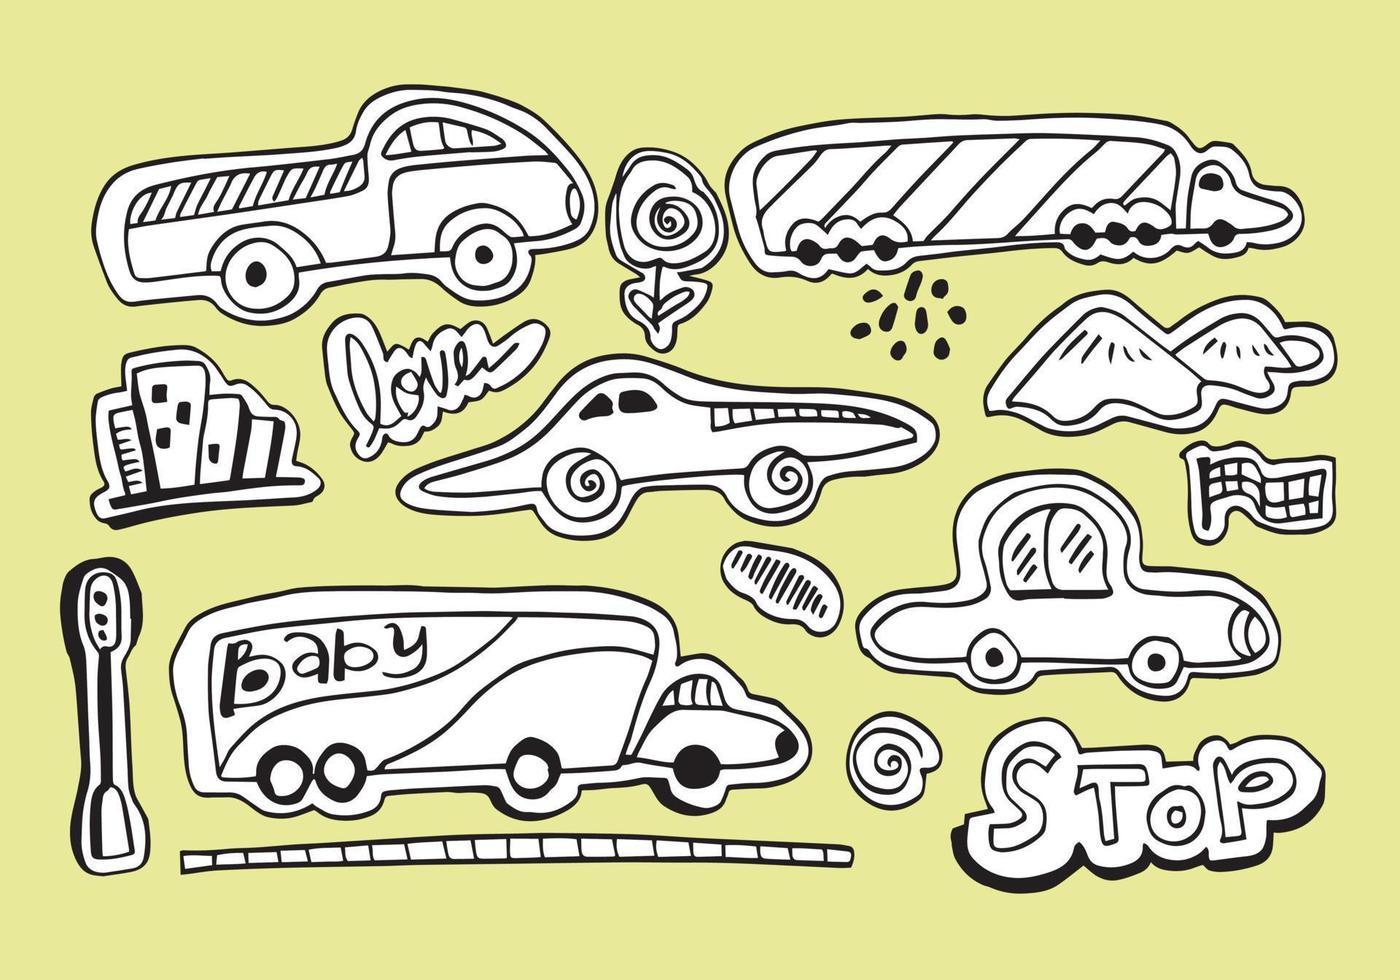 conjunto de diferentes bocetos de coches de garabatos. ilustración vectorial de línea negra dibujada a mano. vector